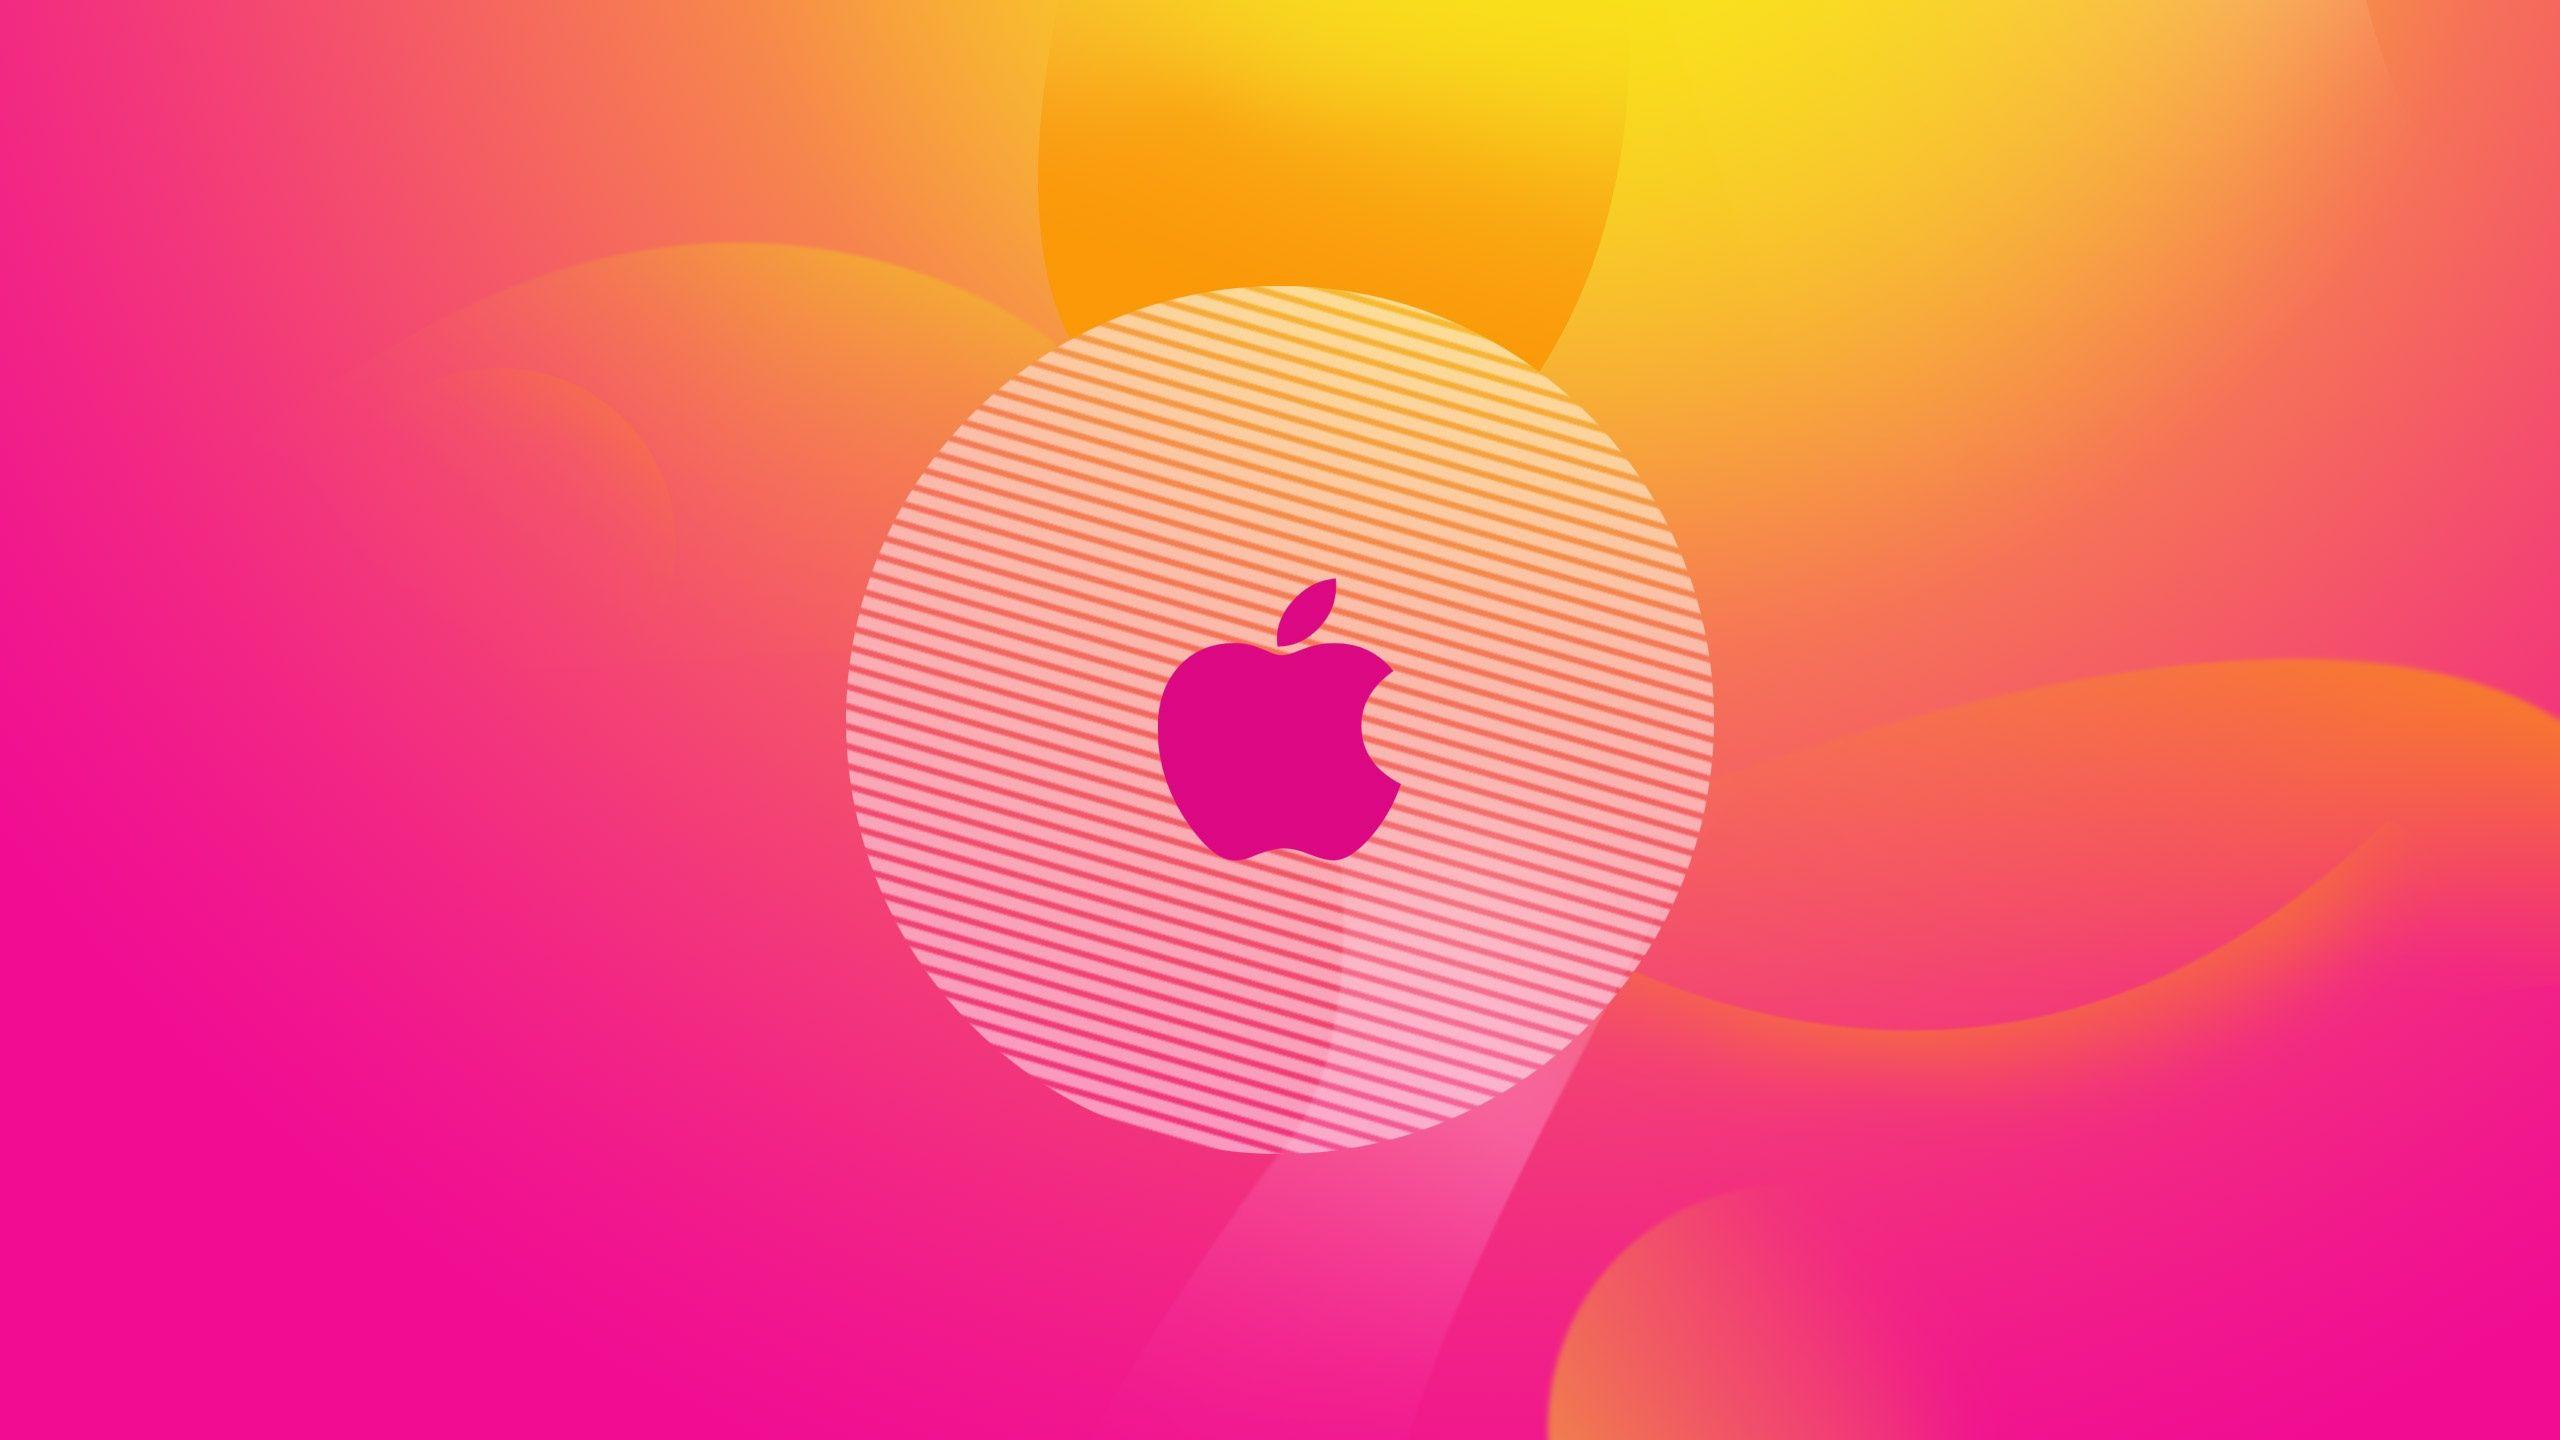 Apple iMac Logo